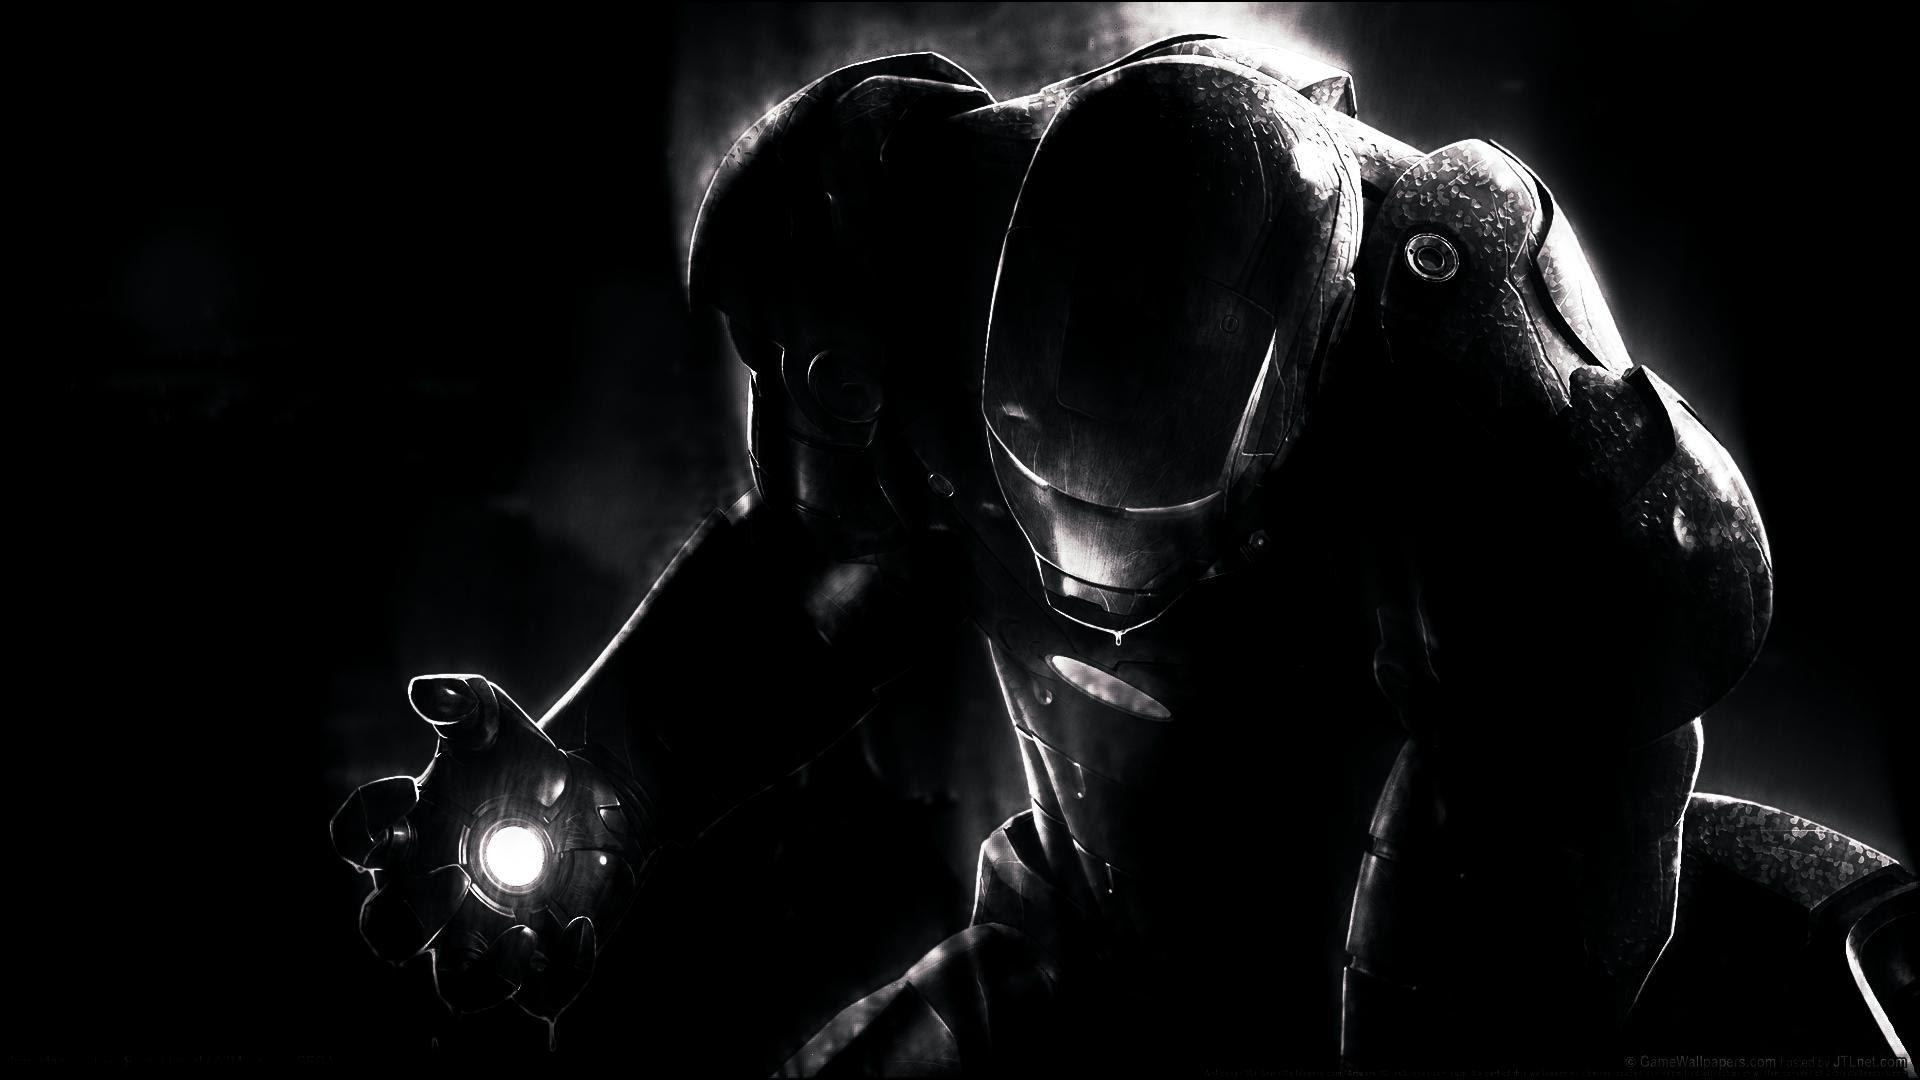 Iron Man Wallpaper 1080p (Picture)